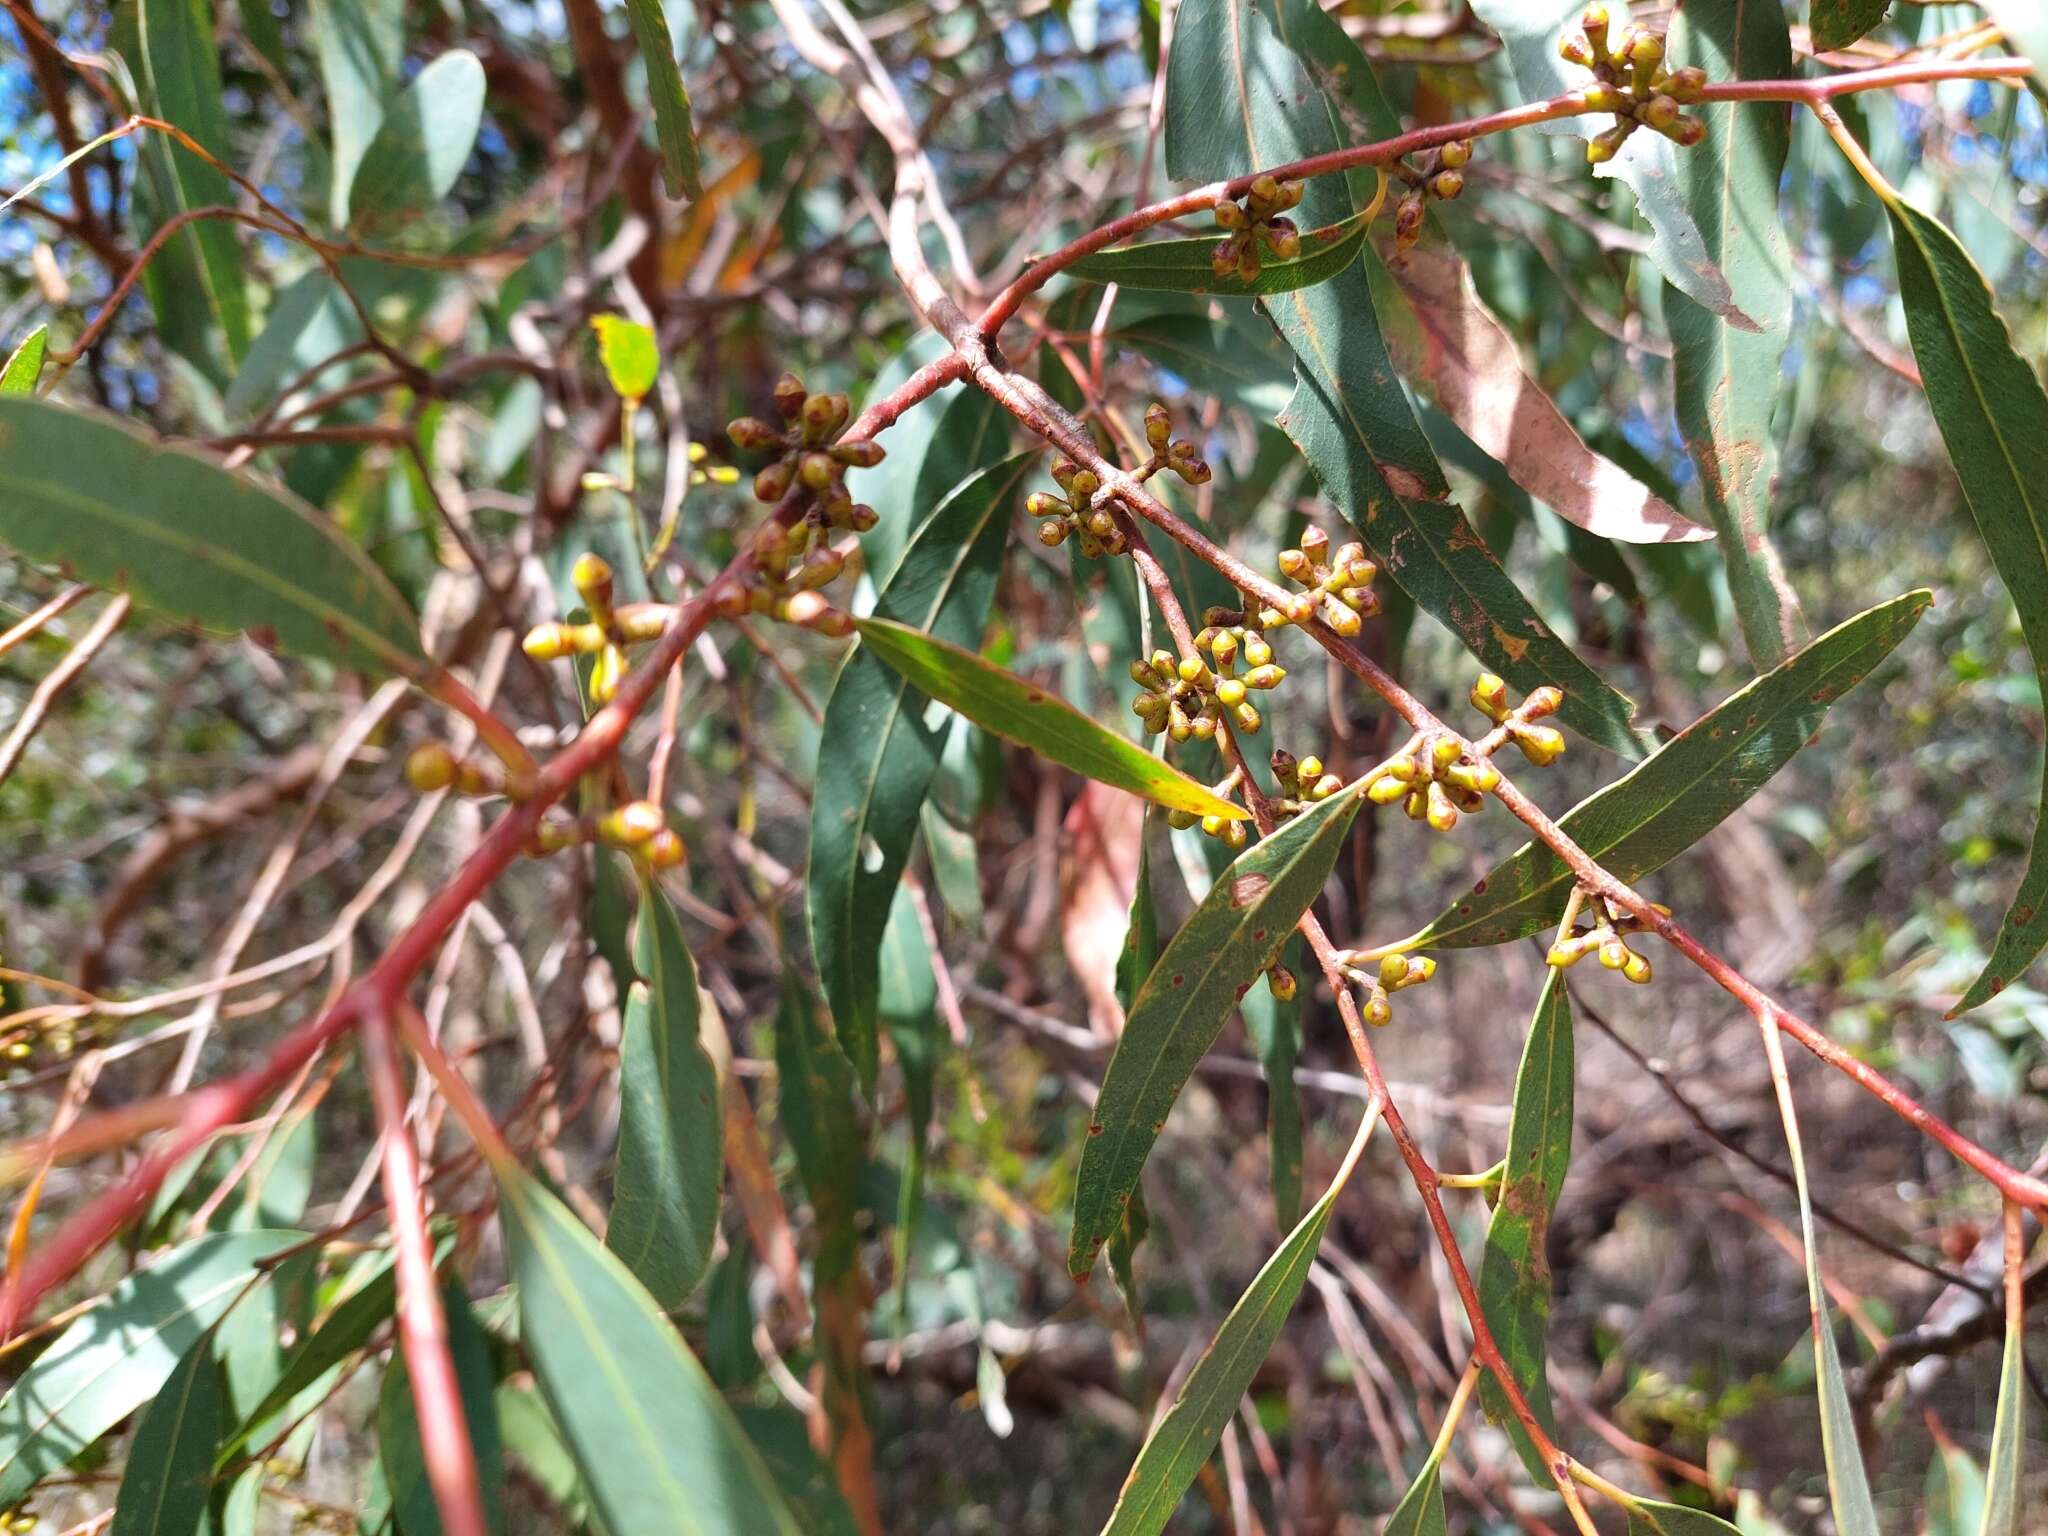 Image of Eucalyptus ignorabilis L. A. S. Johnson & K. D. Hill